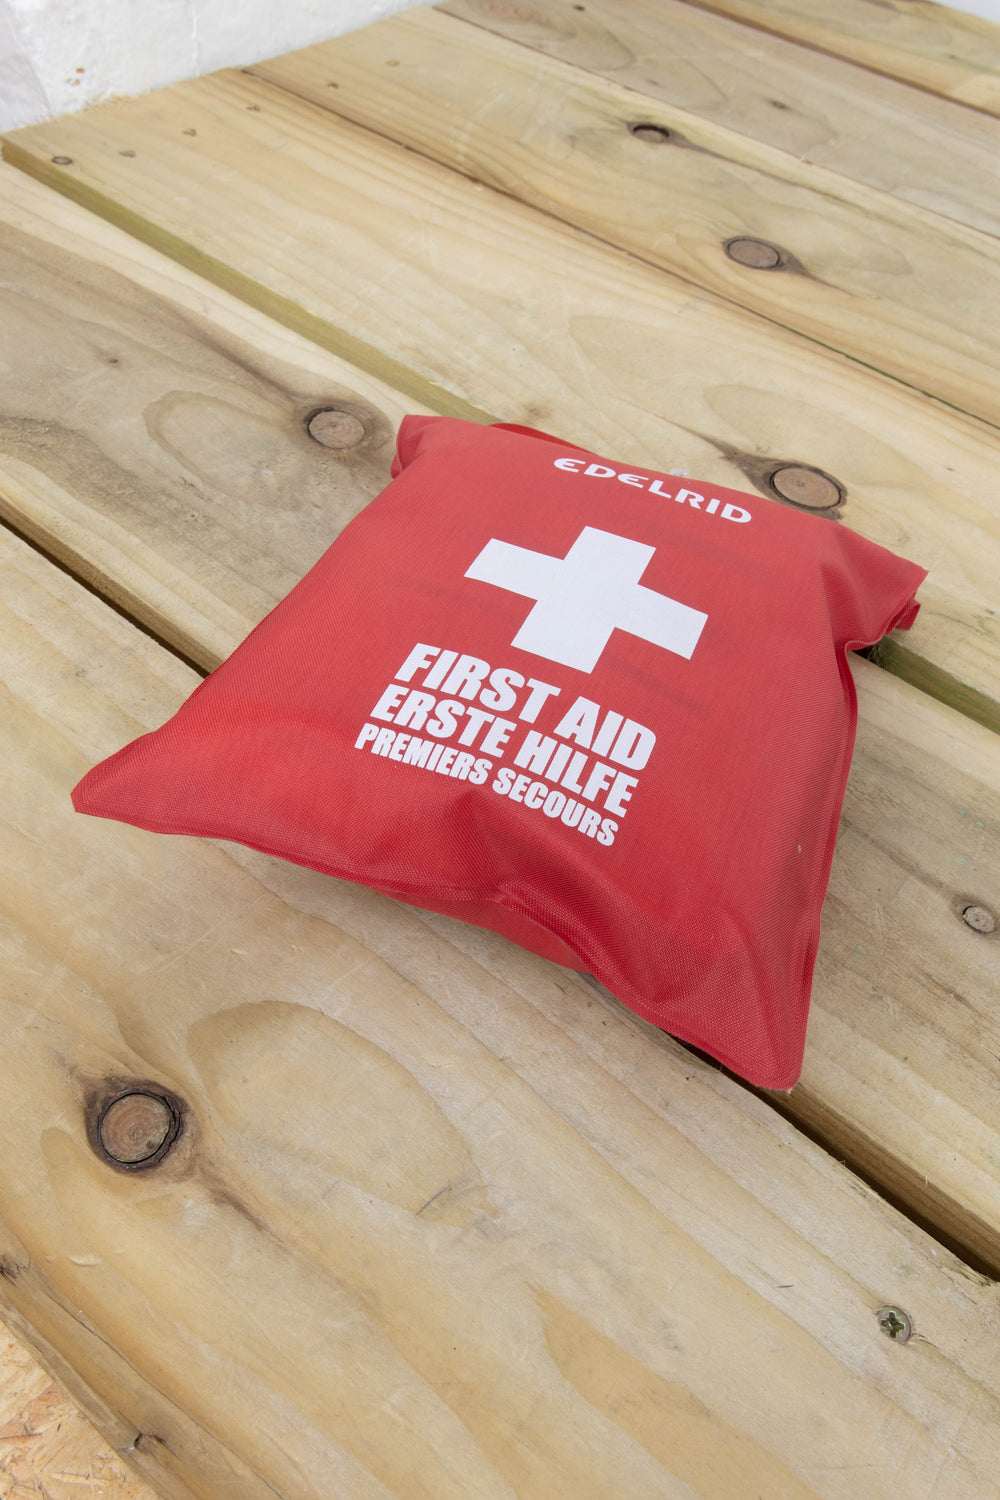 Edelrid - First Aid Kit